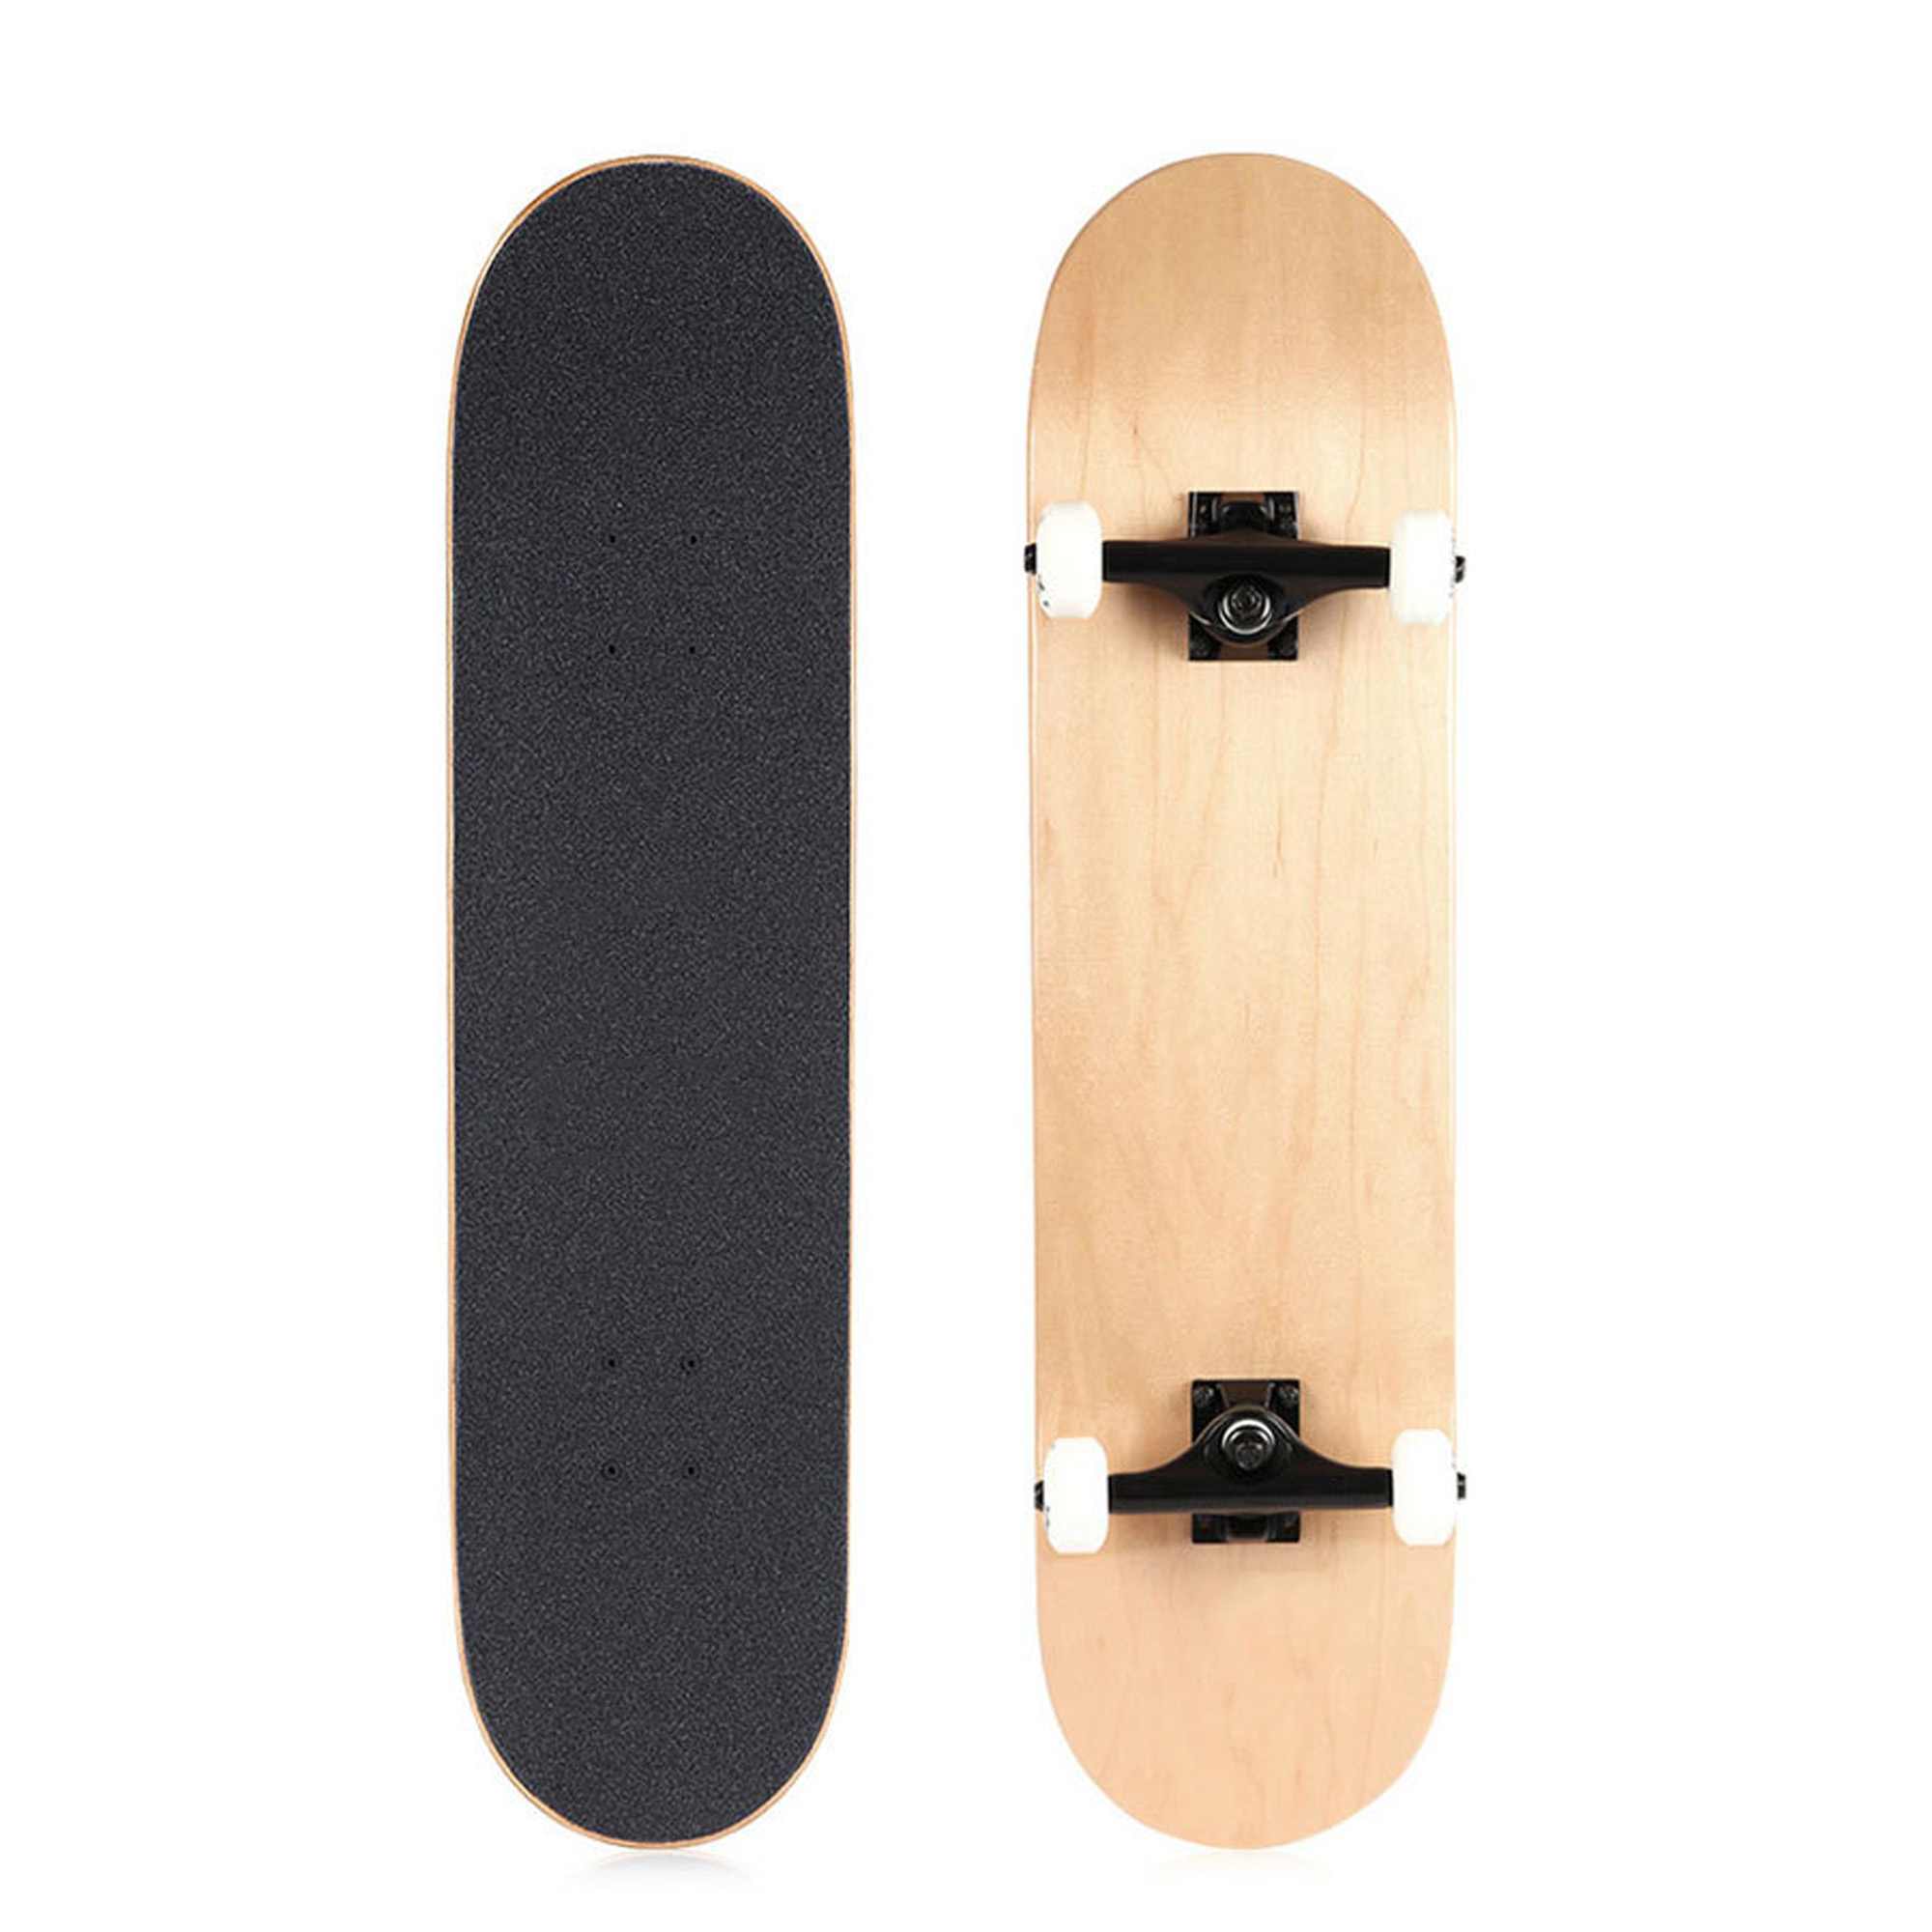 WEIRD异士原木滑板枫木双翘整板专业高配新手入门款DIY组装手绘板